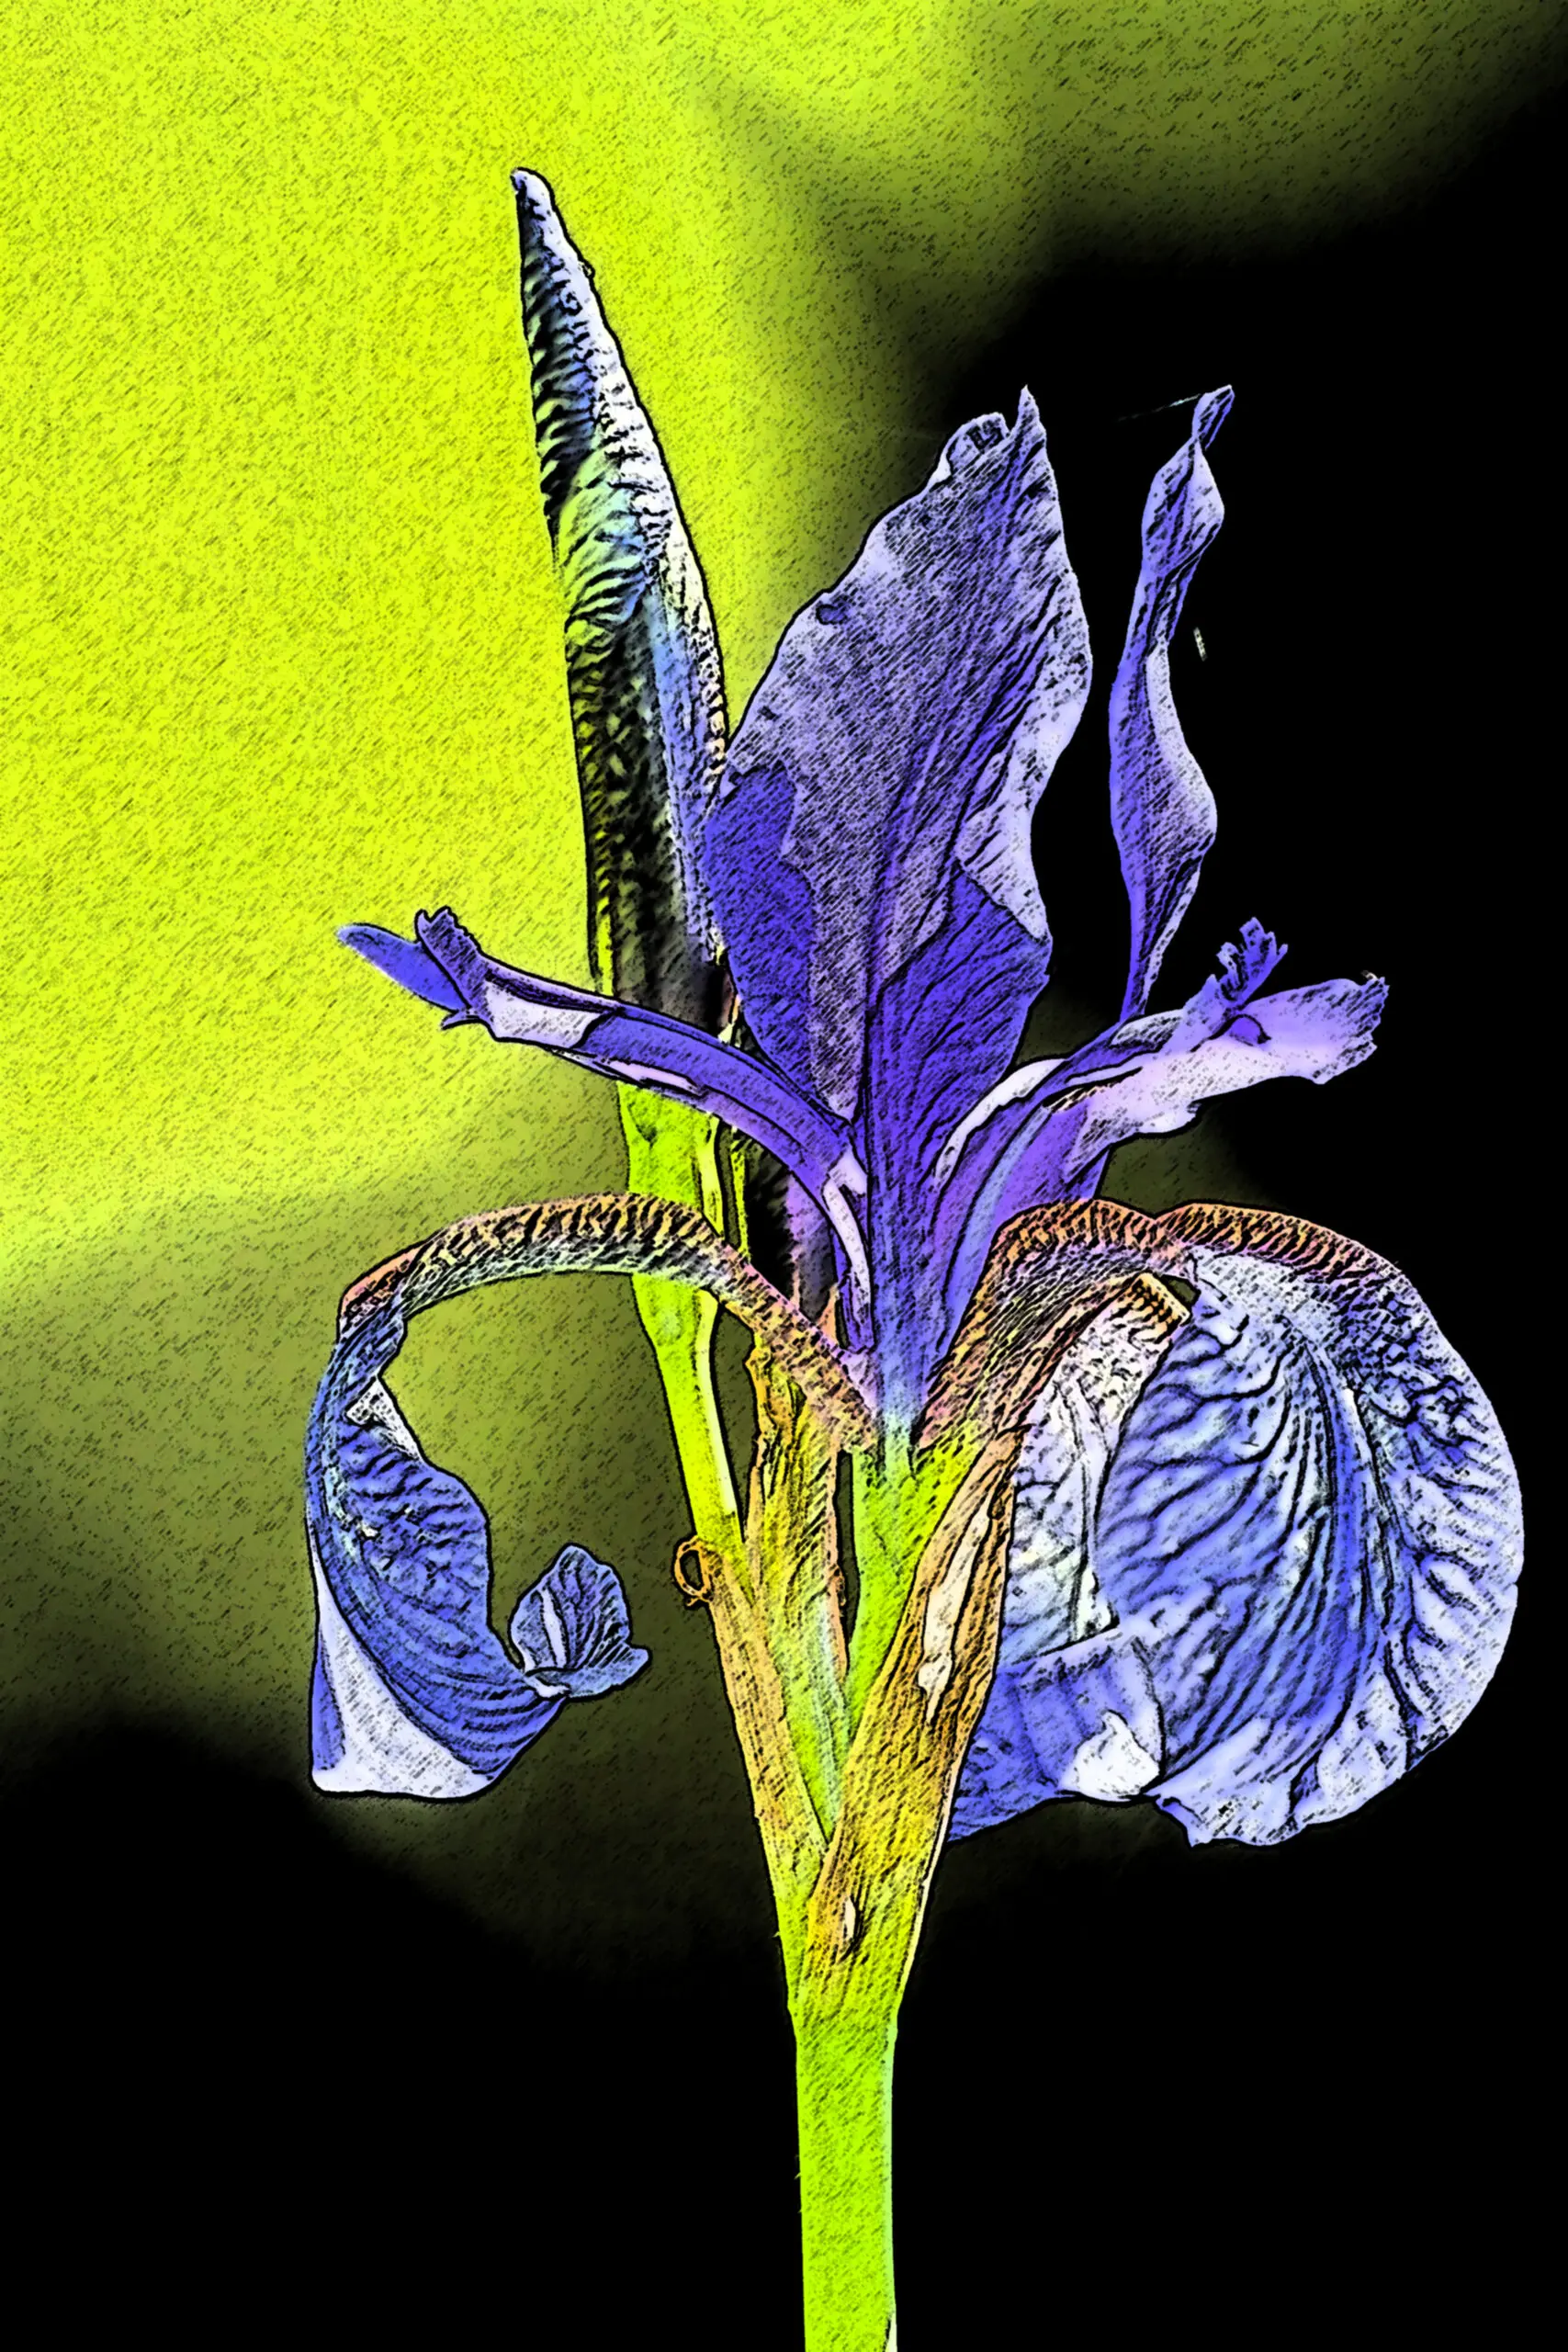 Wandbild (1416) Blaue Iris präsentiert: Kreatives,Abstrakt,Blumen und Blüten